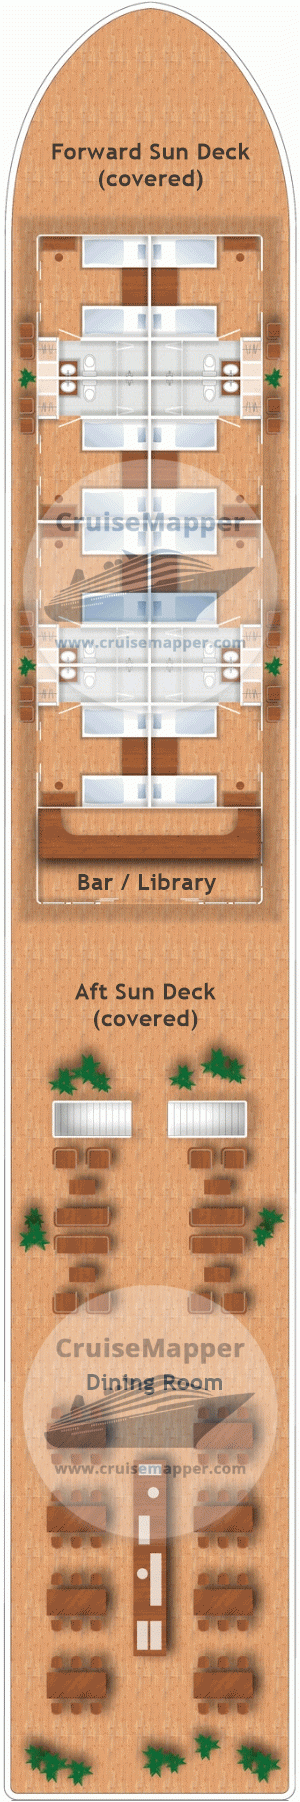 RV Kindat Pandaw Deck 02 - Upper-Sun-Dining-Lounge